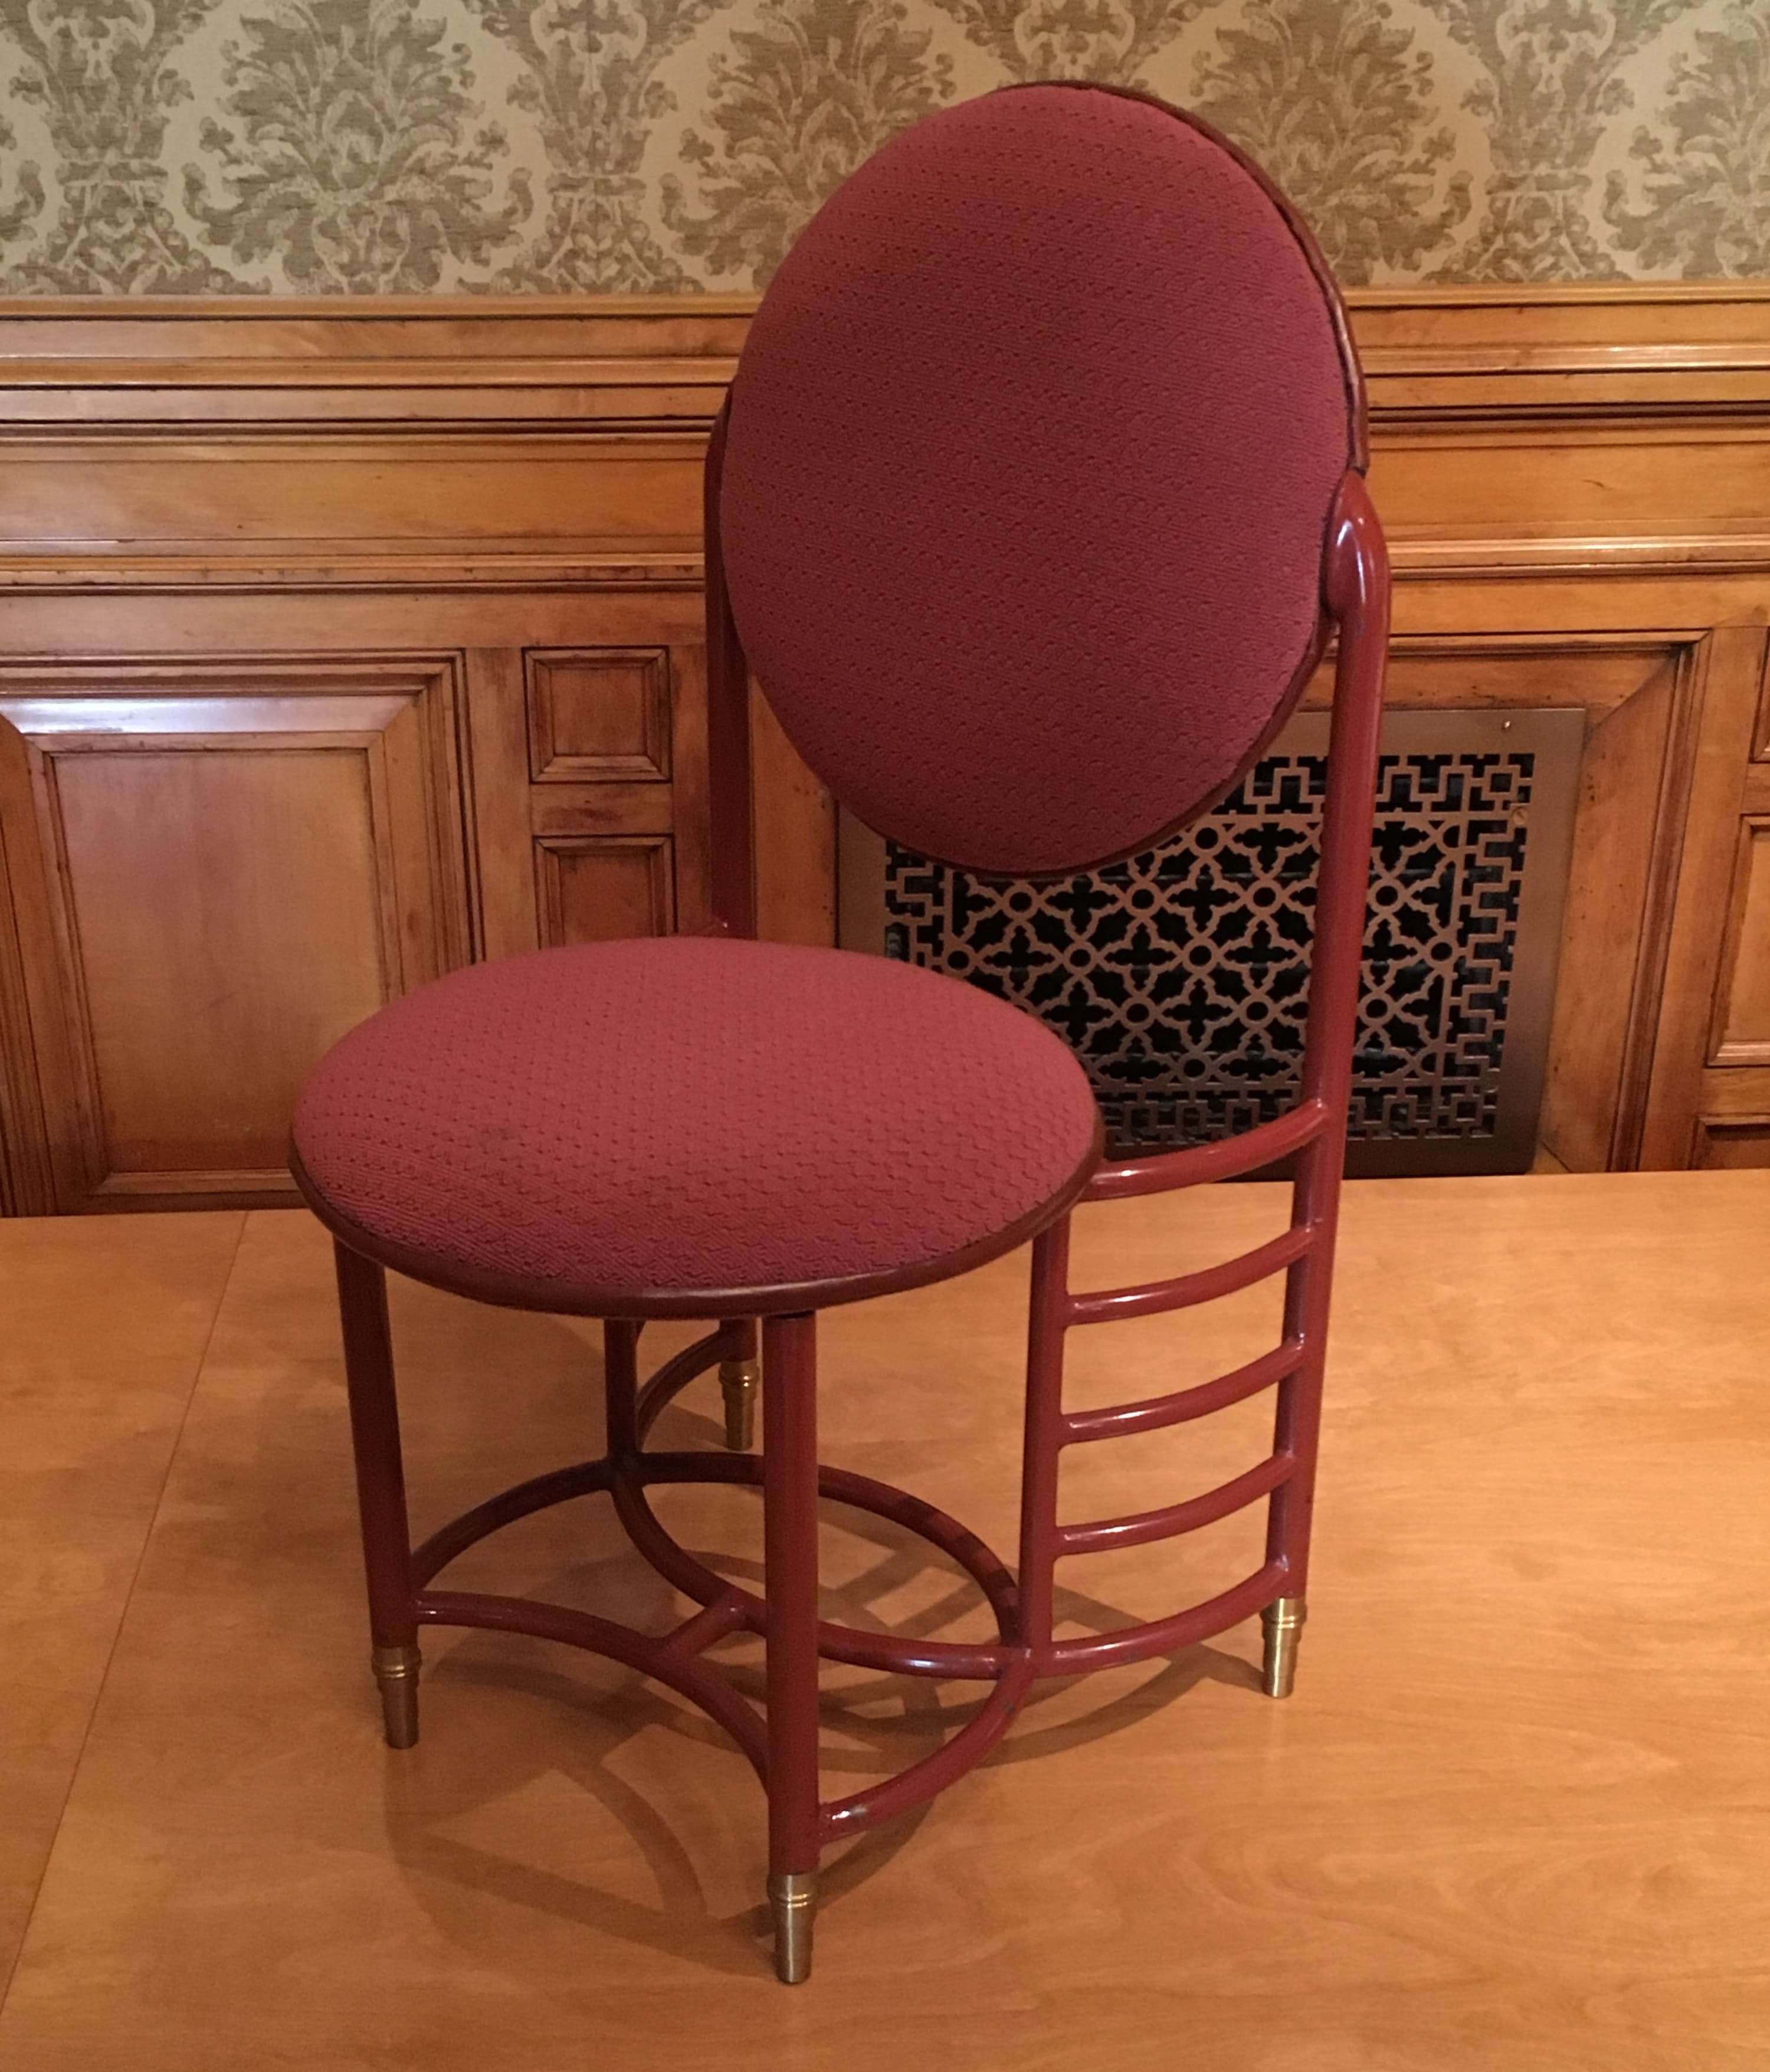 Johnson Wax Company Chair, Designed by Frank Lloyd Wright